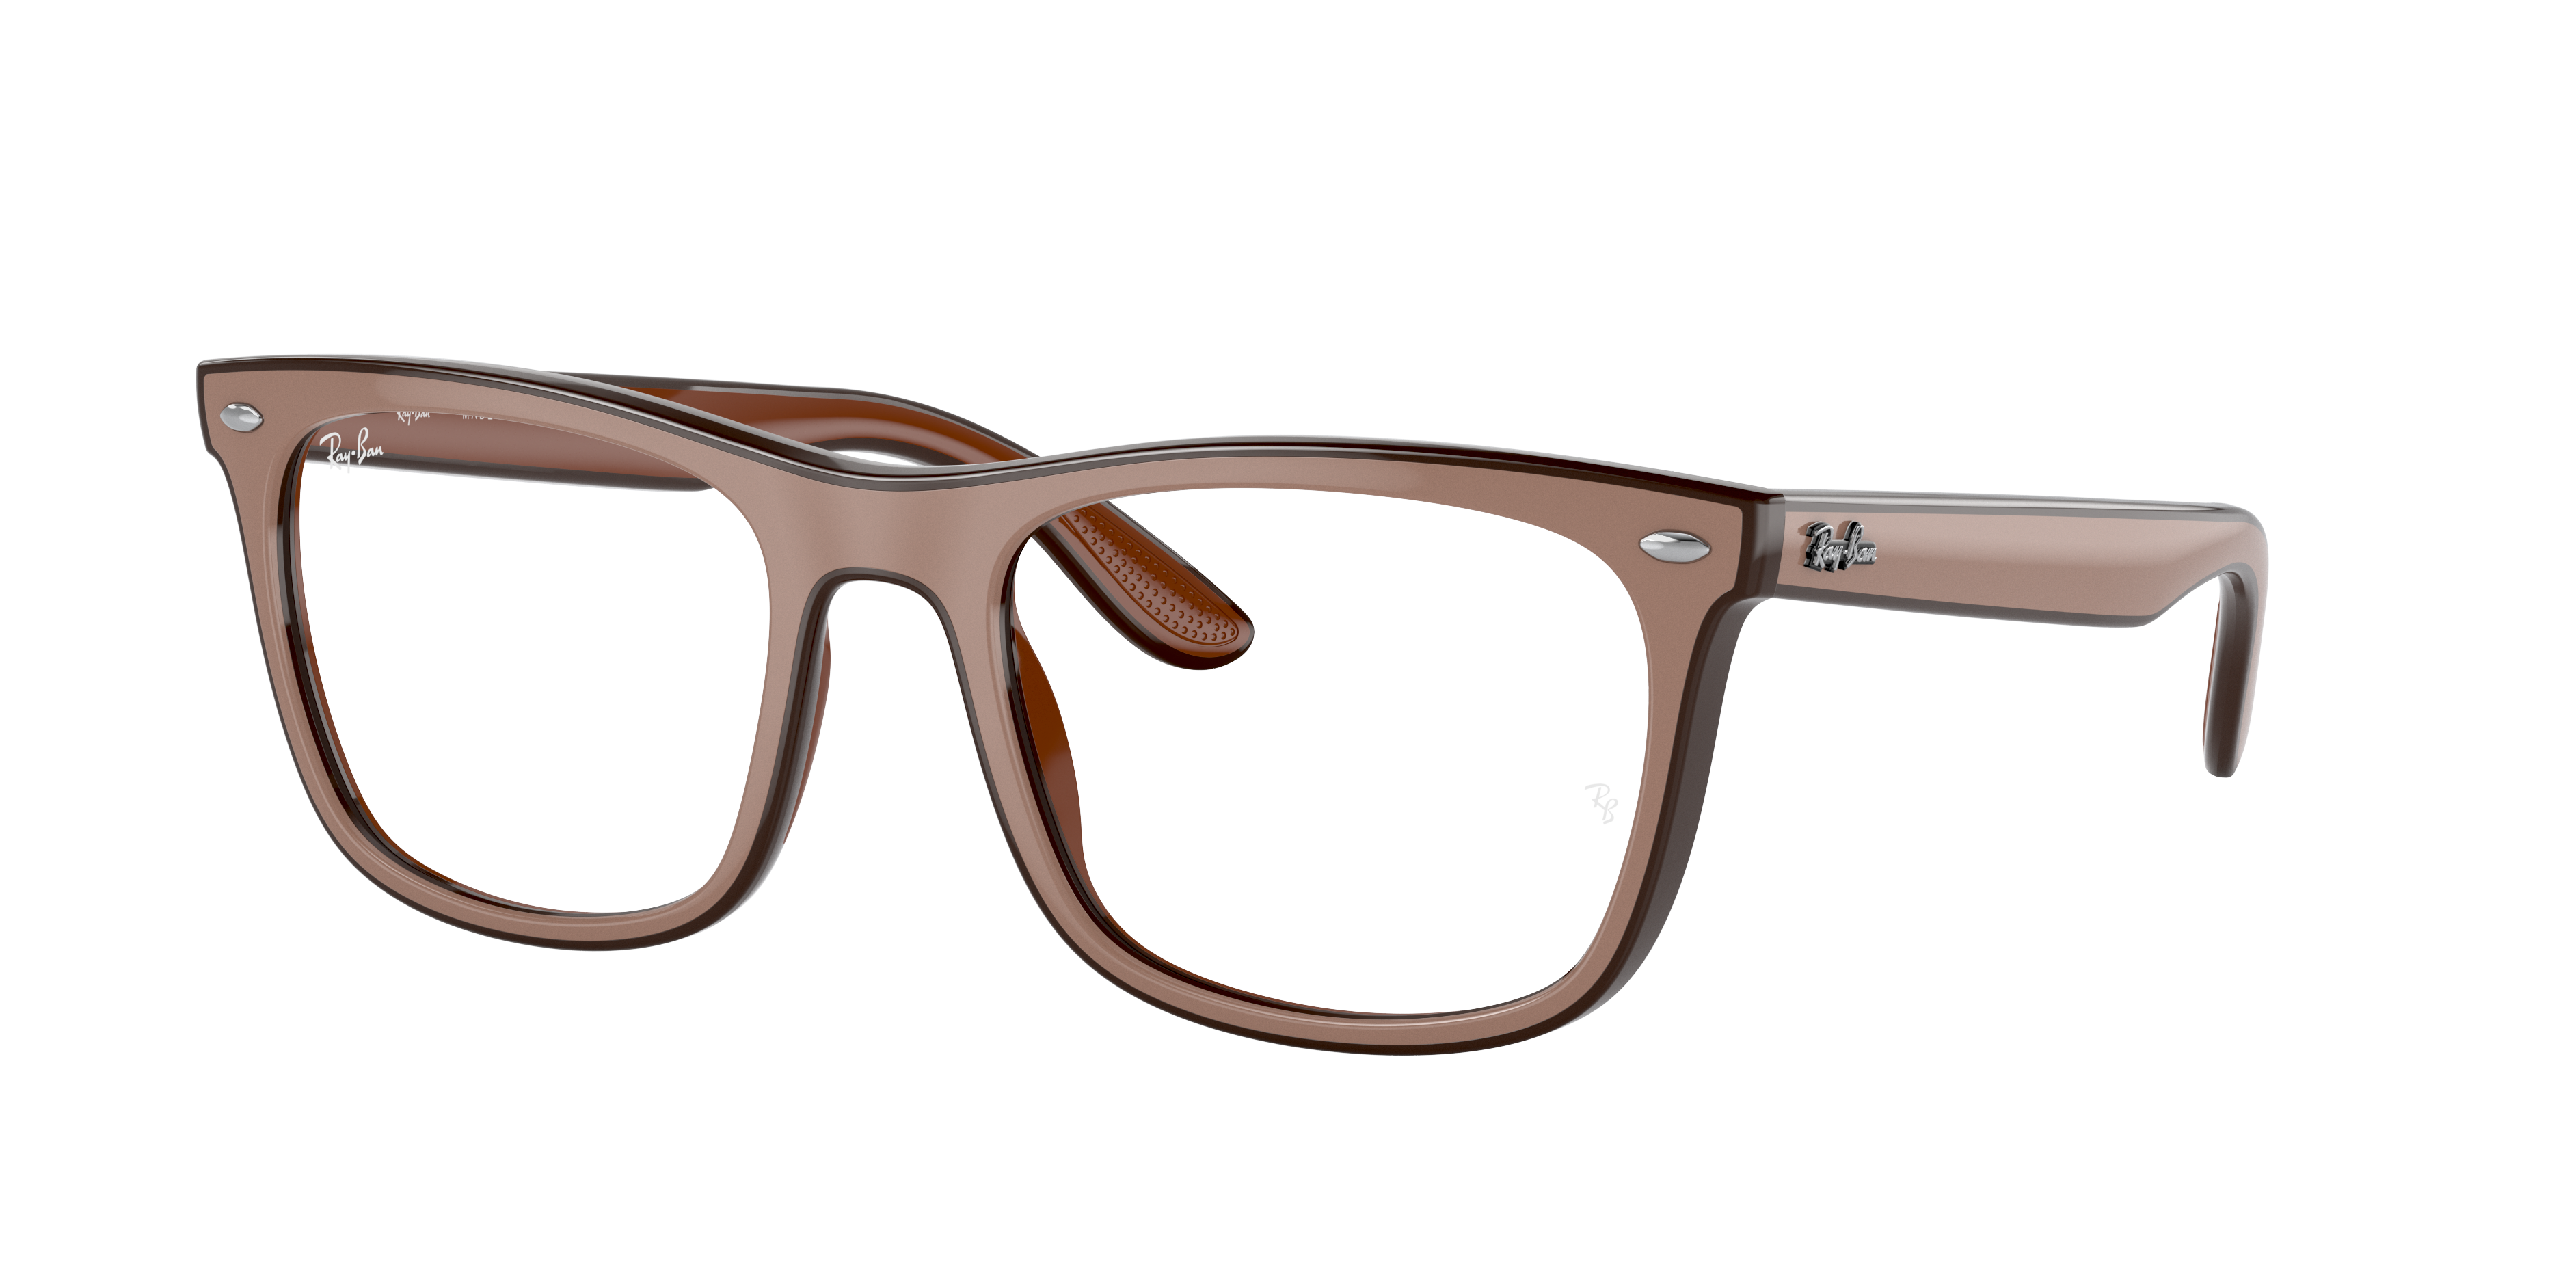 Rb7209 Optics Eyeglasses with Dark Brown Frame | Ray-Ban®